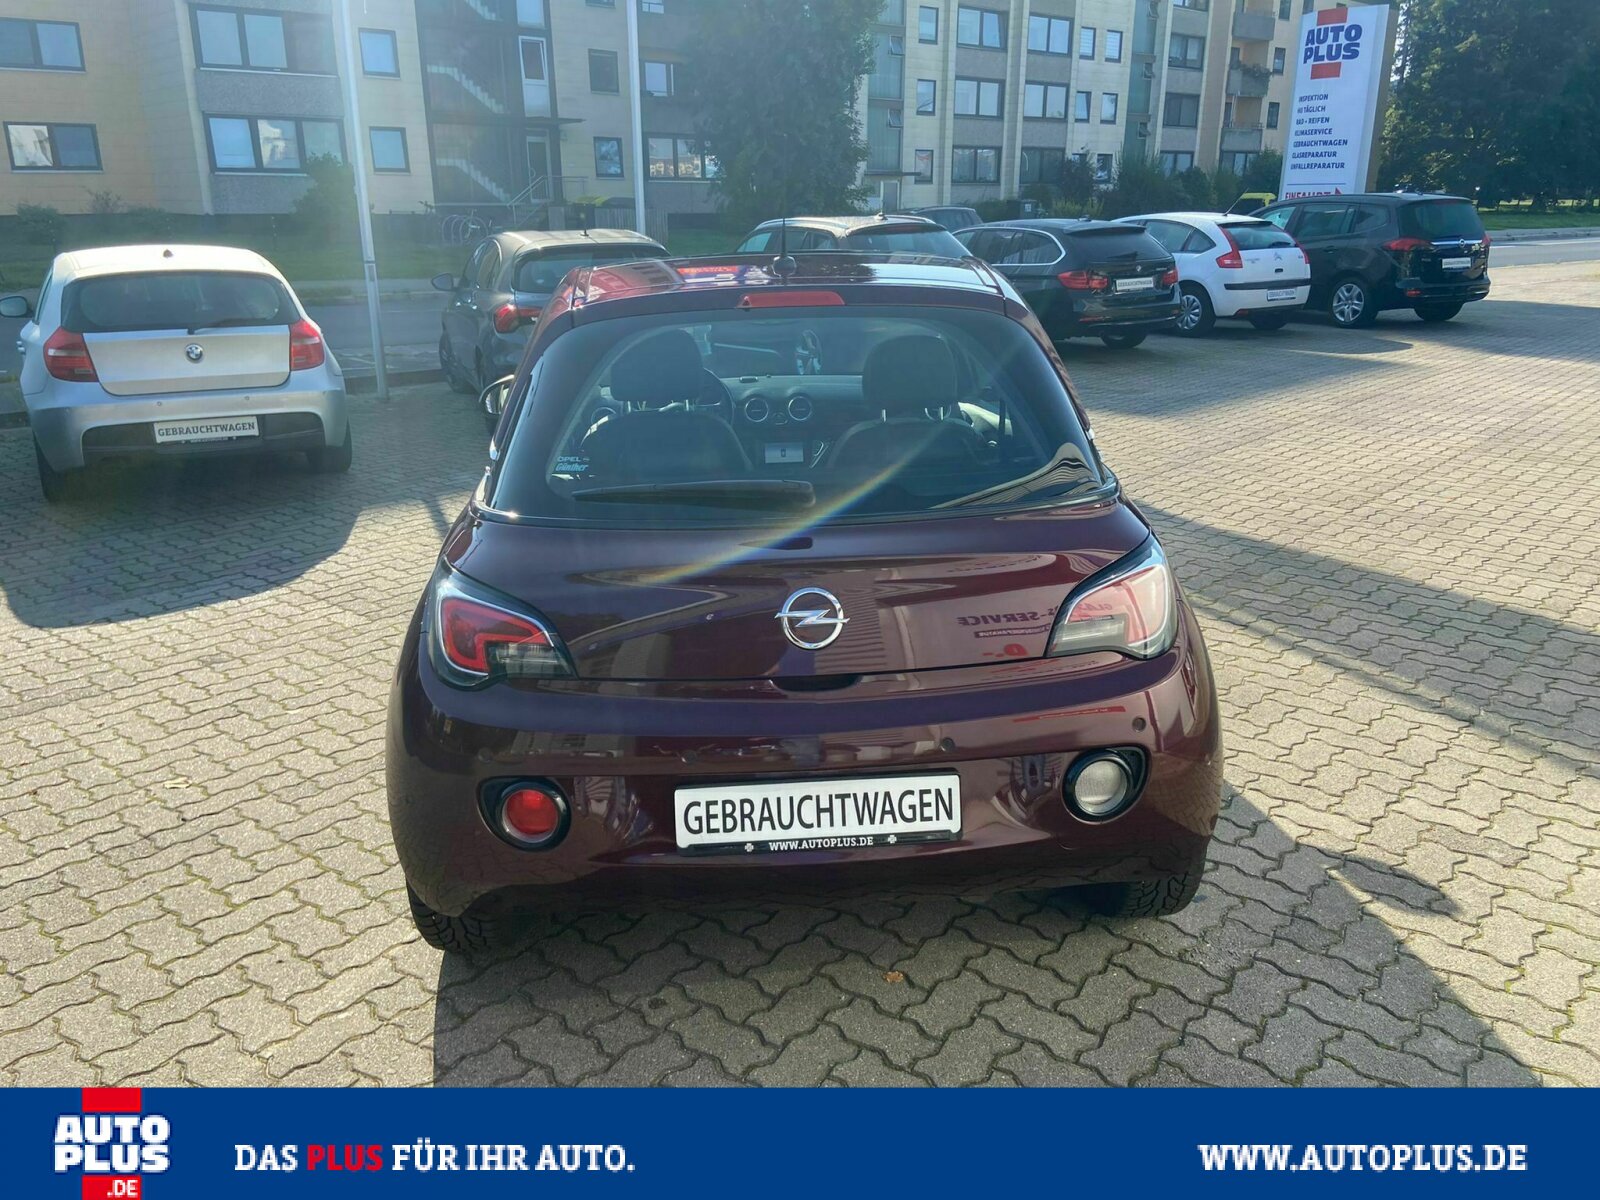 Opel Adam 1.4 Glam,LED Himmel, PDC, Sitzheizung gebraucht kaufen in  Rutesheim Preis 8990 eur - Int.Nr.: 2551_11399 VERKAUFT